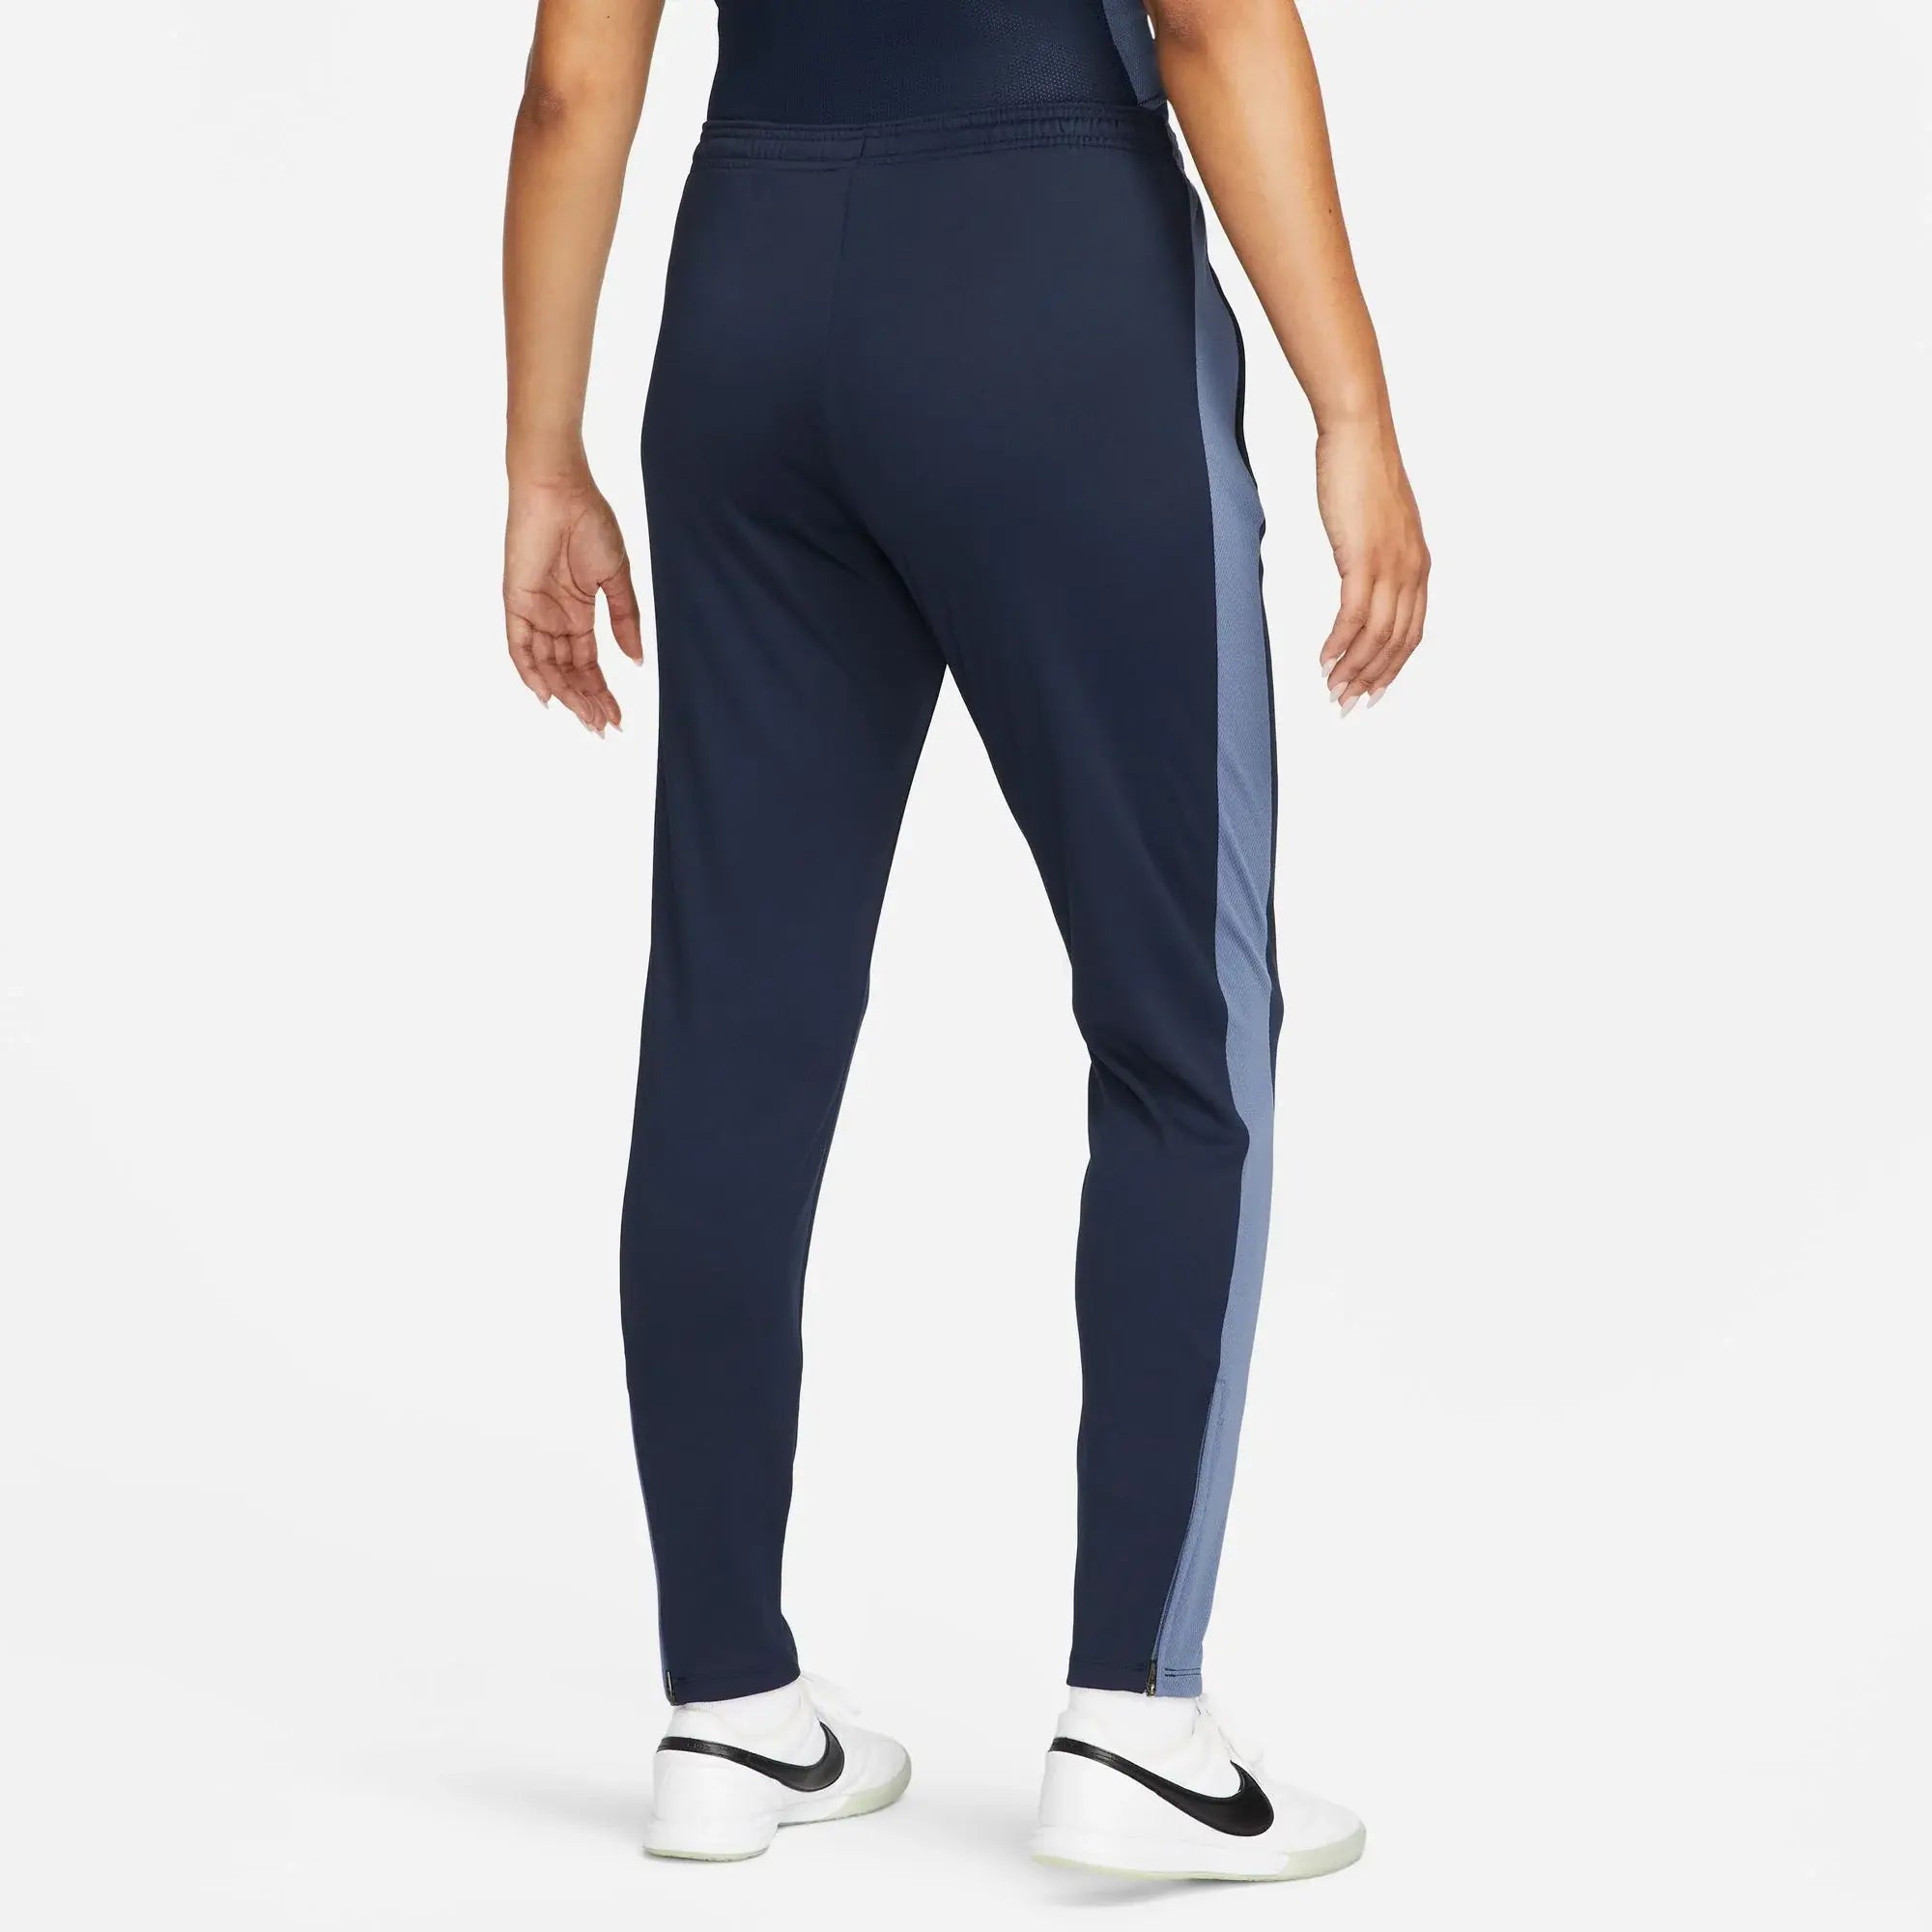 Nike Mens Dri fit Woven Training Pants - Walmart.com